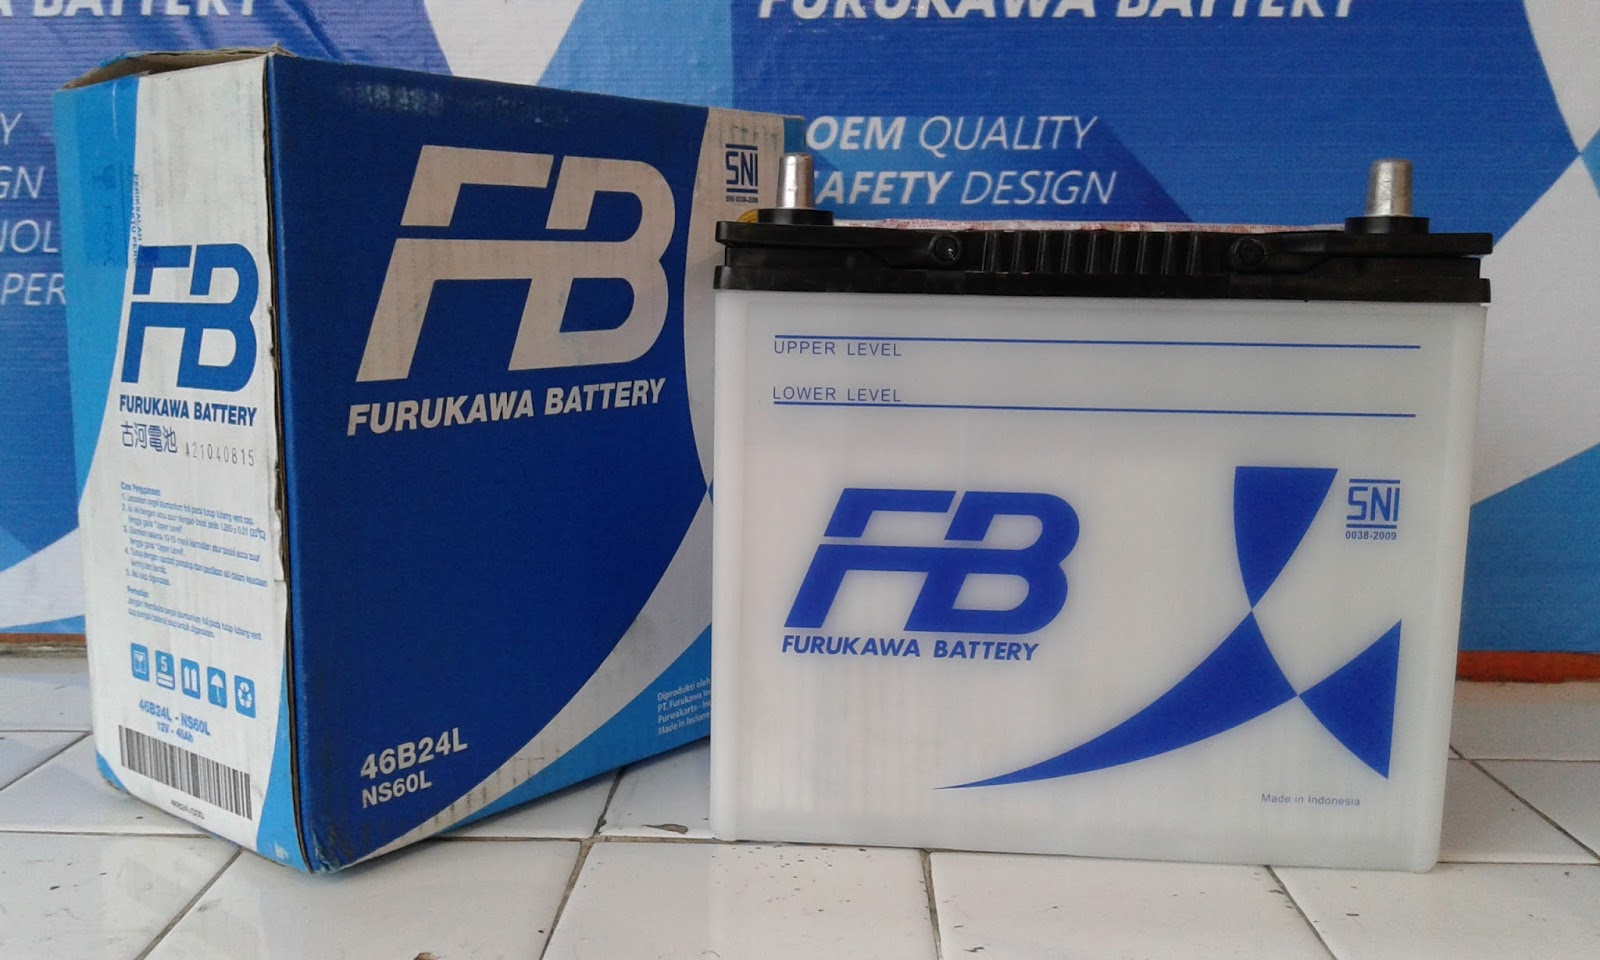 Furukawa battery fb. Furukawa Battery fb001. Автомобильный аккумулятор 12в 50 ампер Furukawa Battery. Furukawa Battery Upper Level.